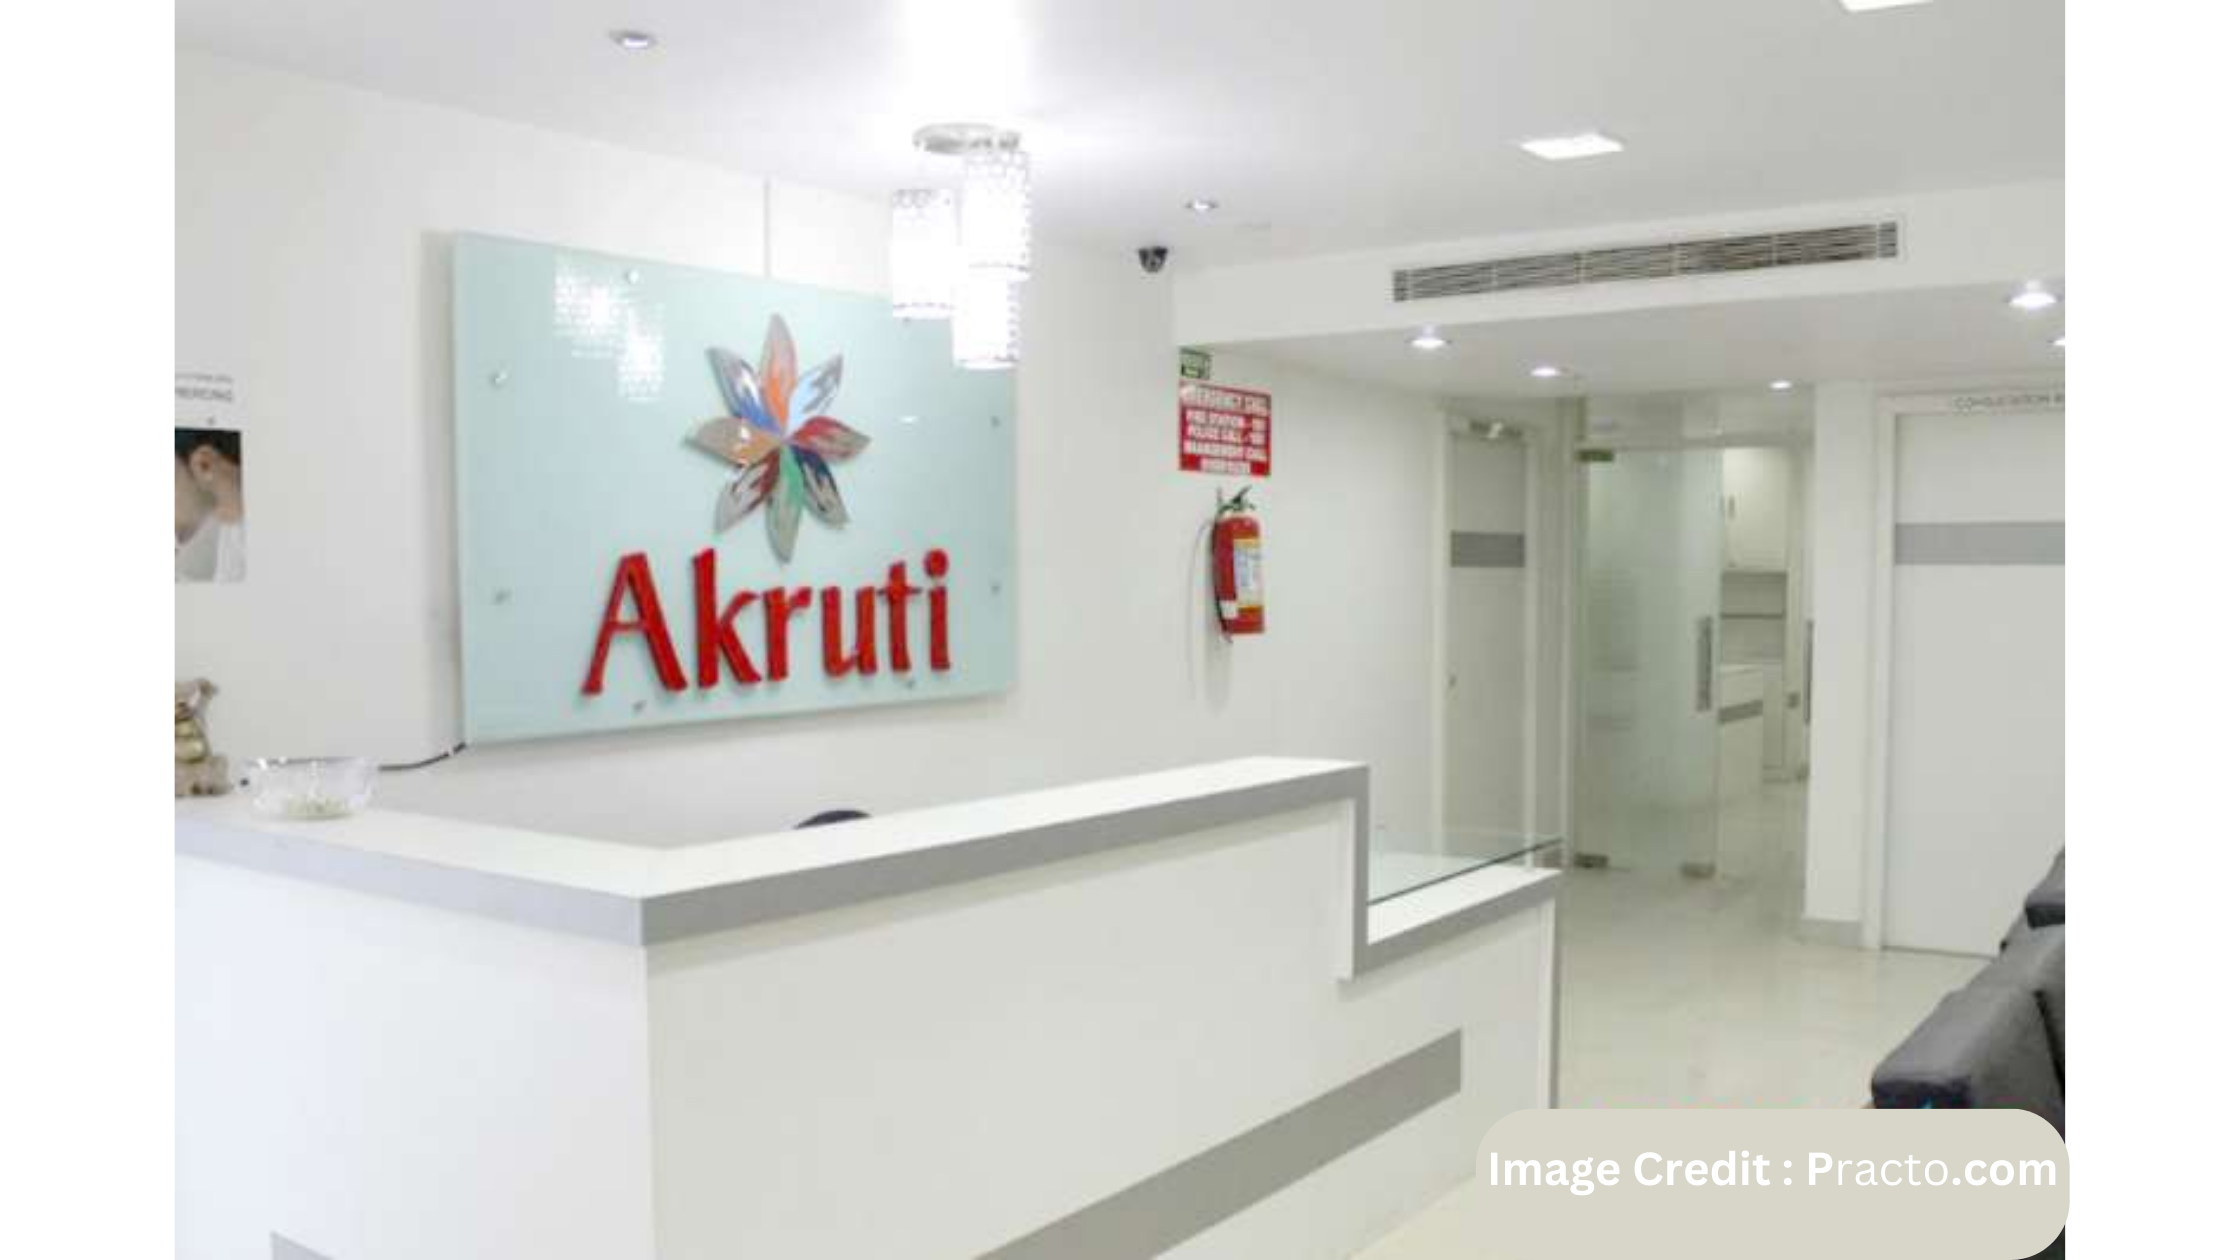 Akruti Institute of Plastic & Cosmetic Surgery